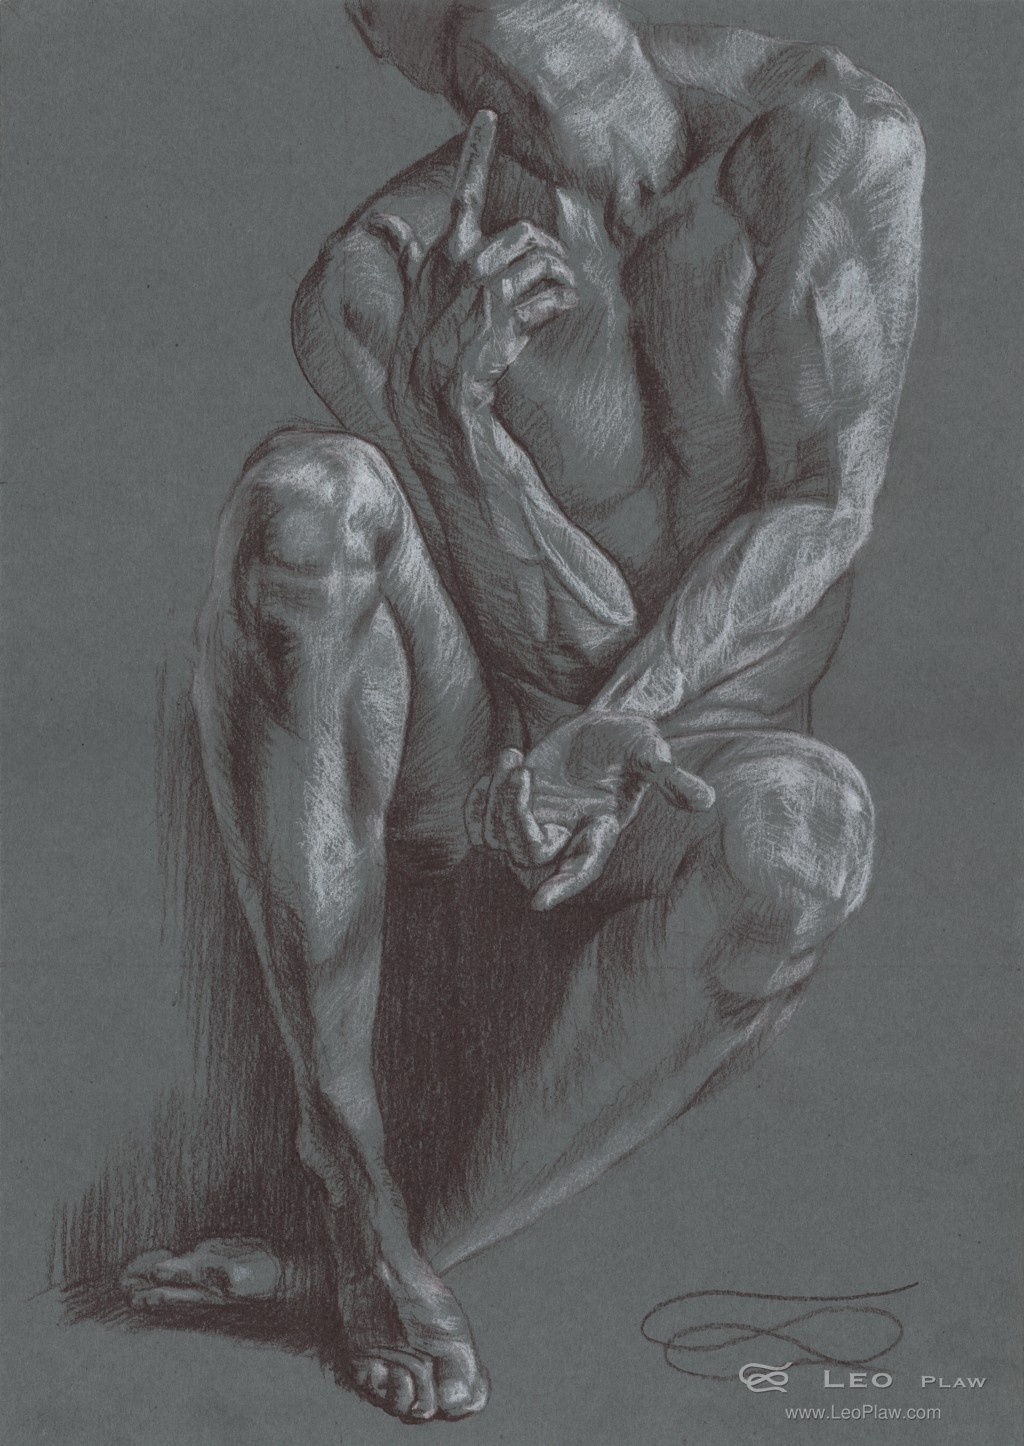 Philosopher (sketch), Leo Plaw, 24x34cm, pencil on paper